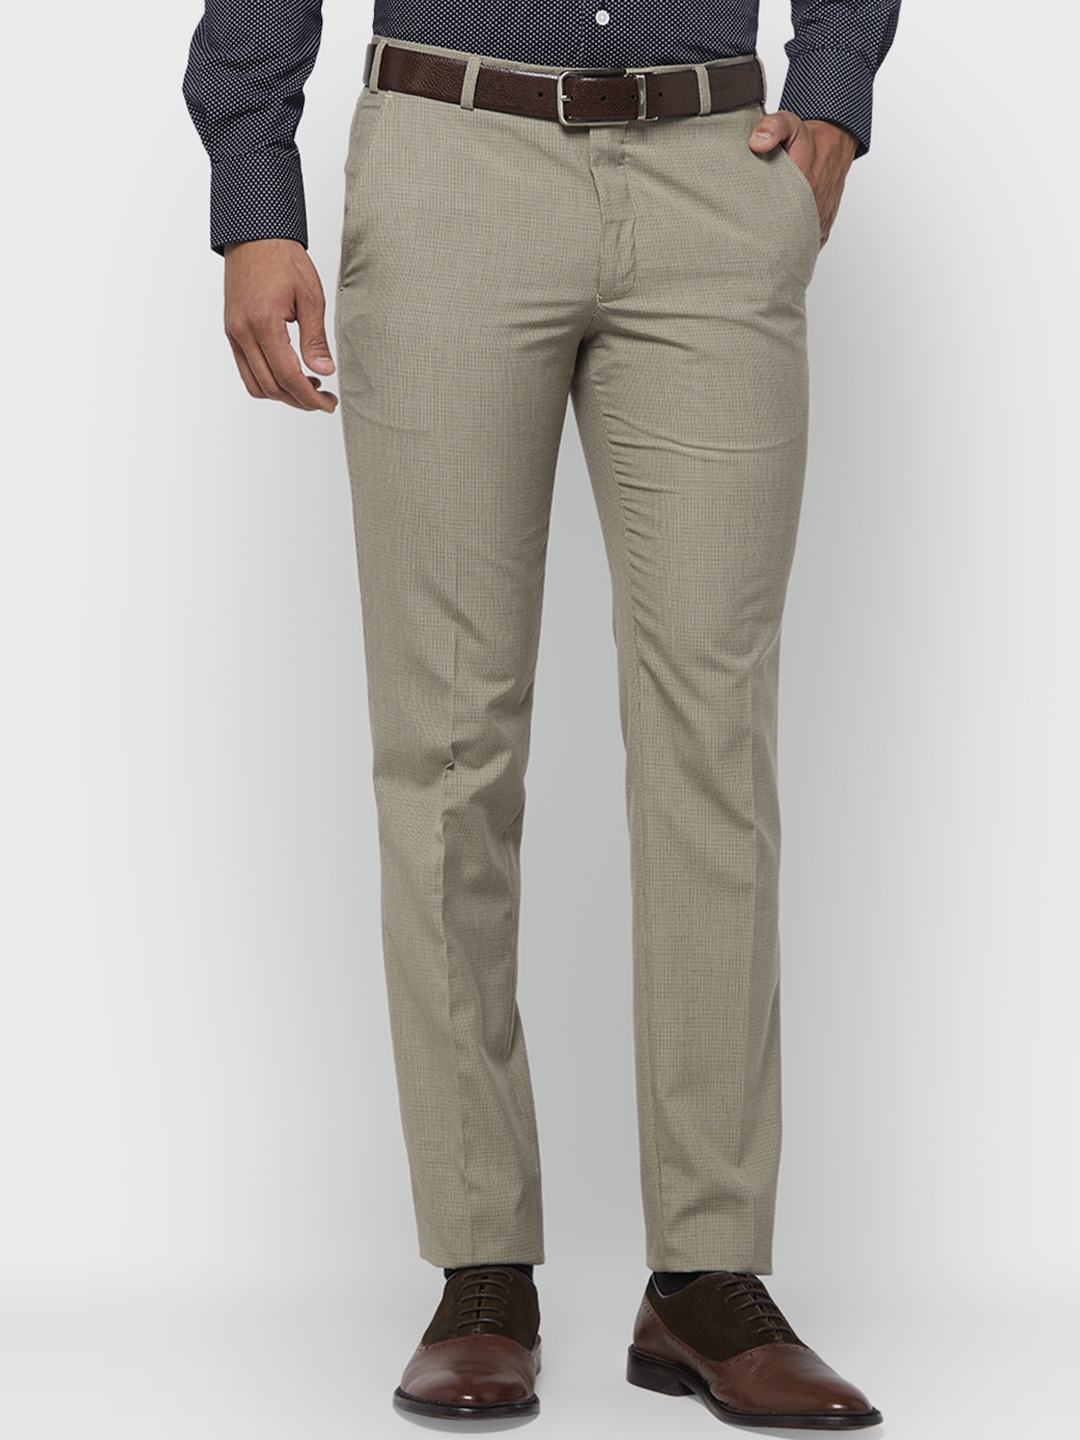 Buy Beige Trousers  Pants for Men by NEXT LOOK Online  Ajiocom